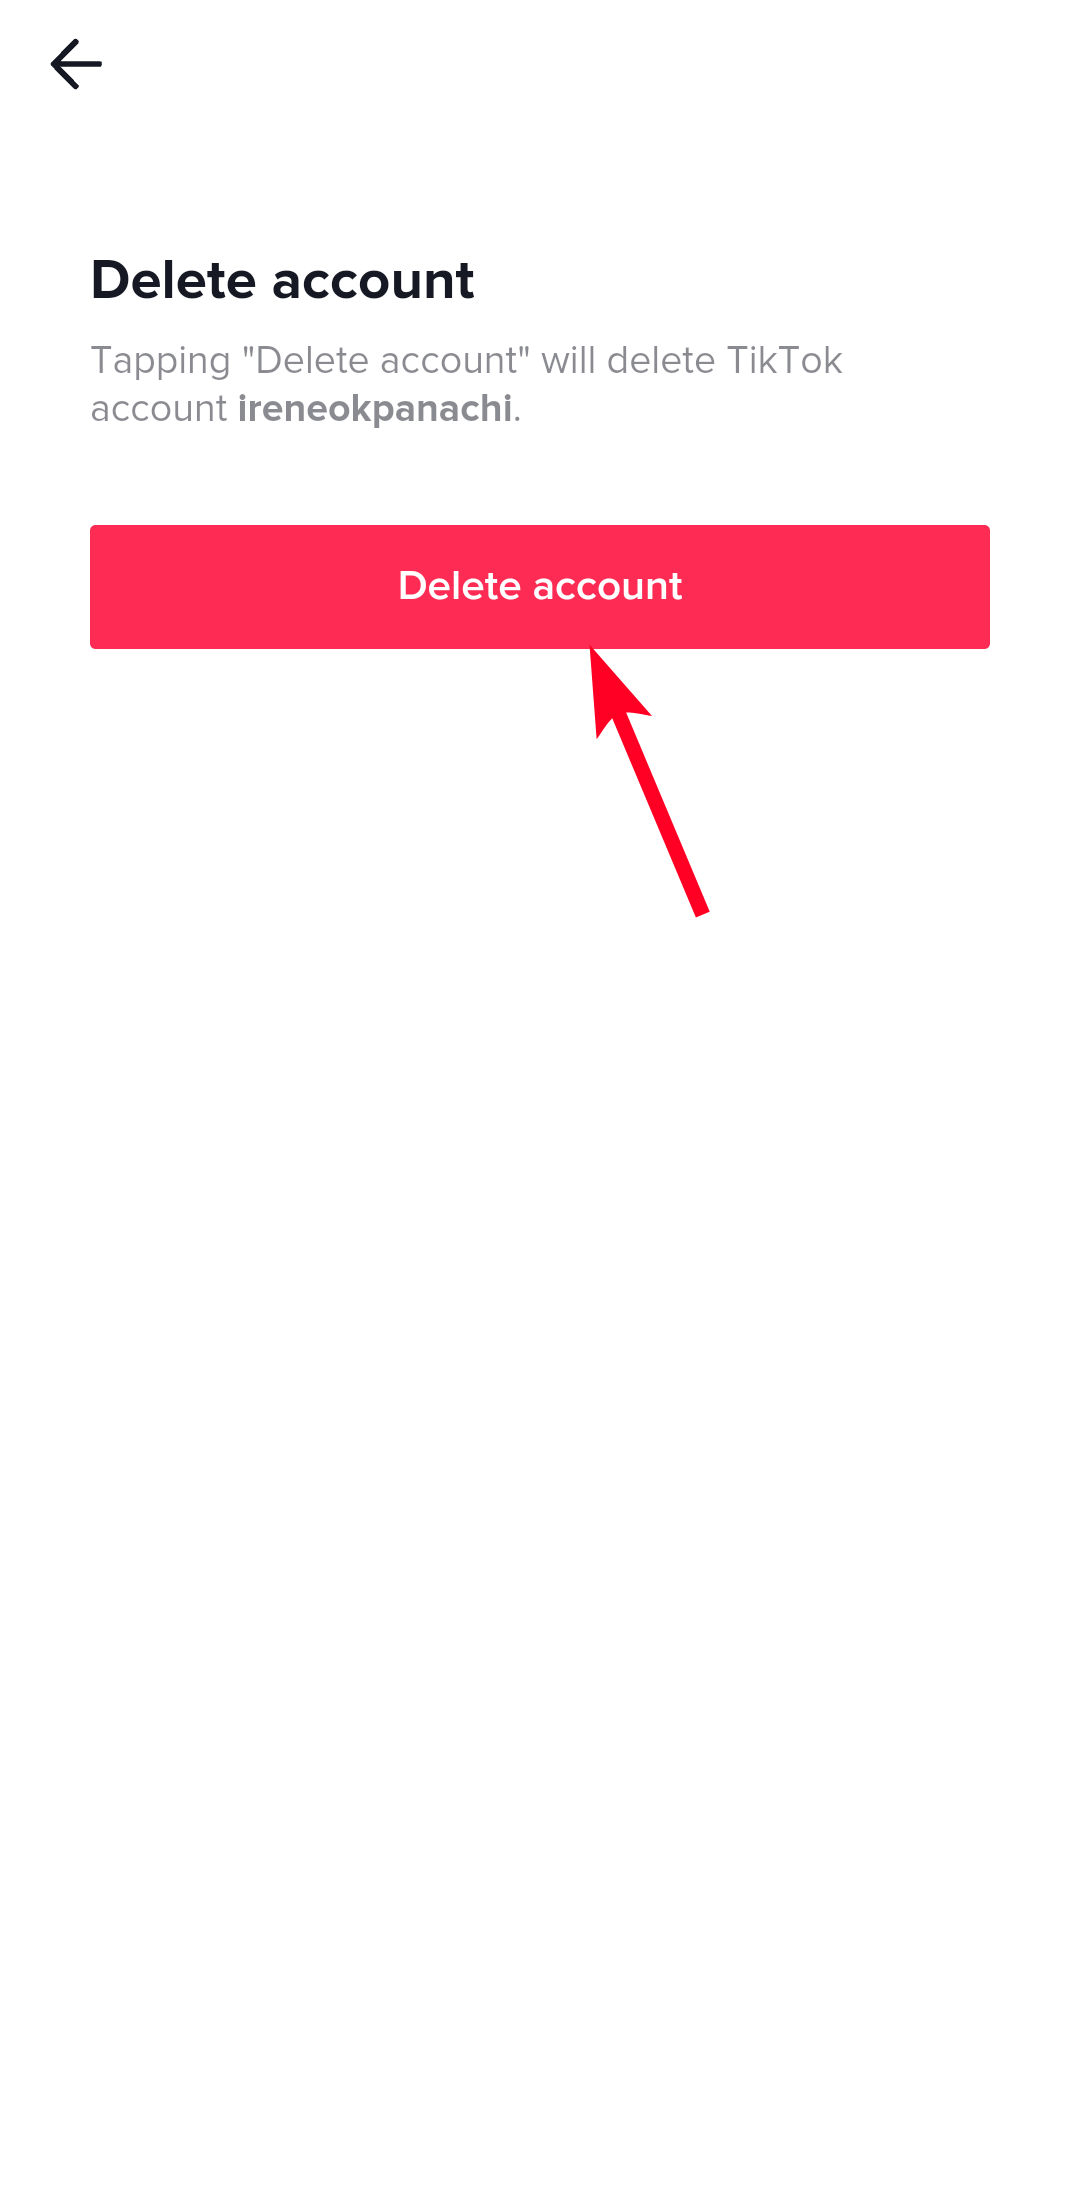 Delete account page on TikTok app